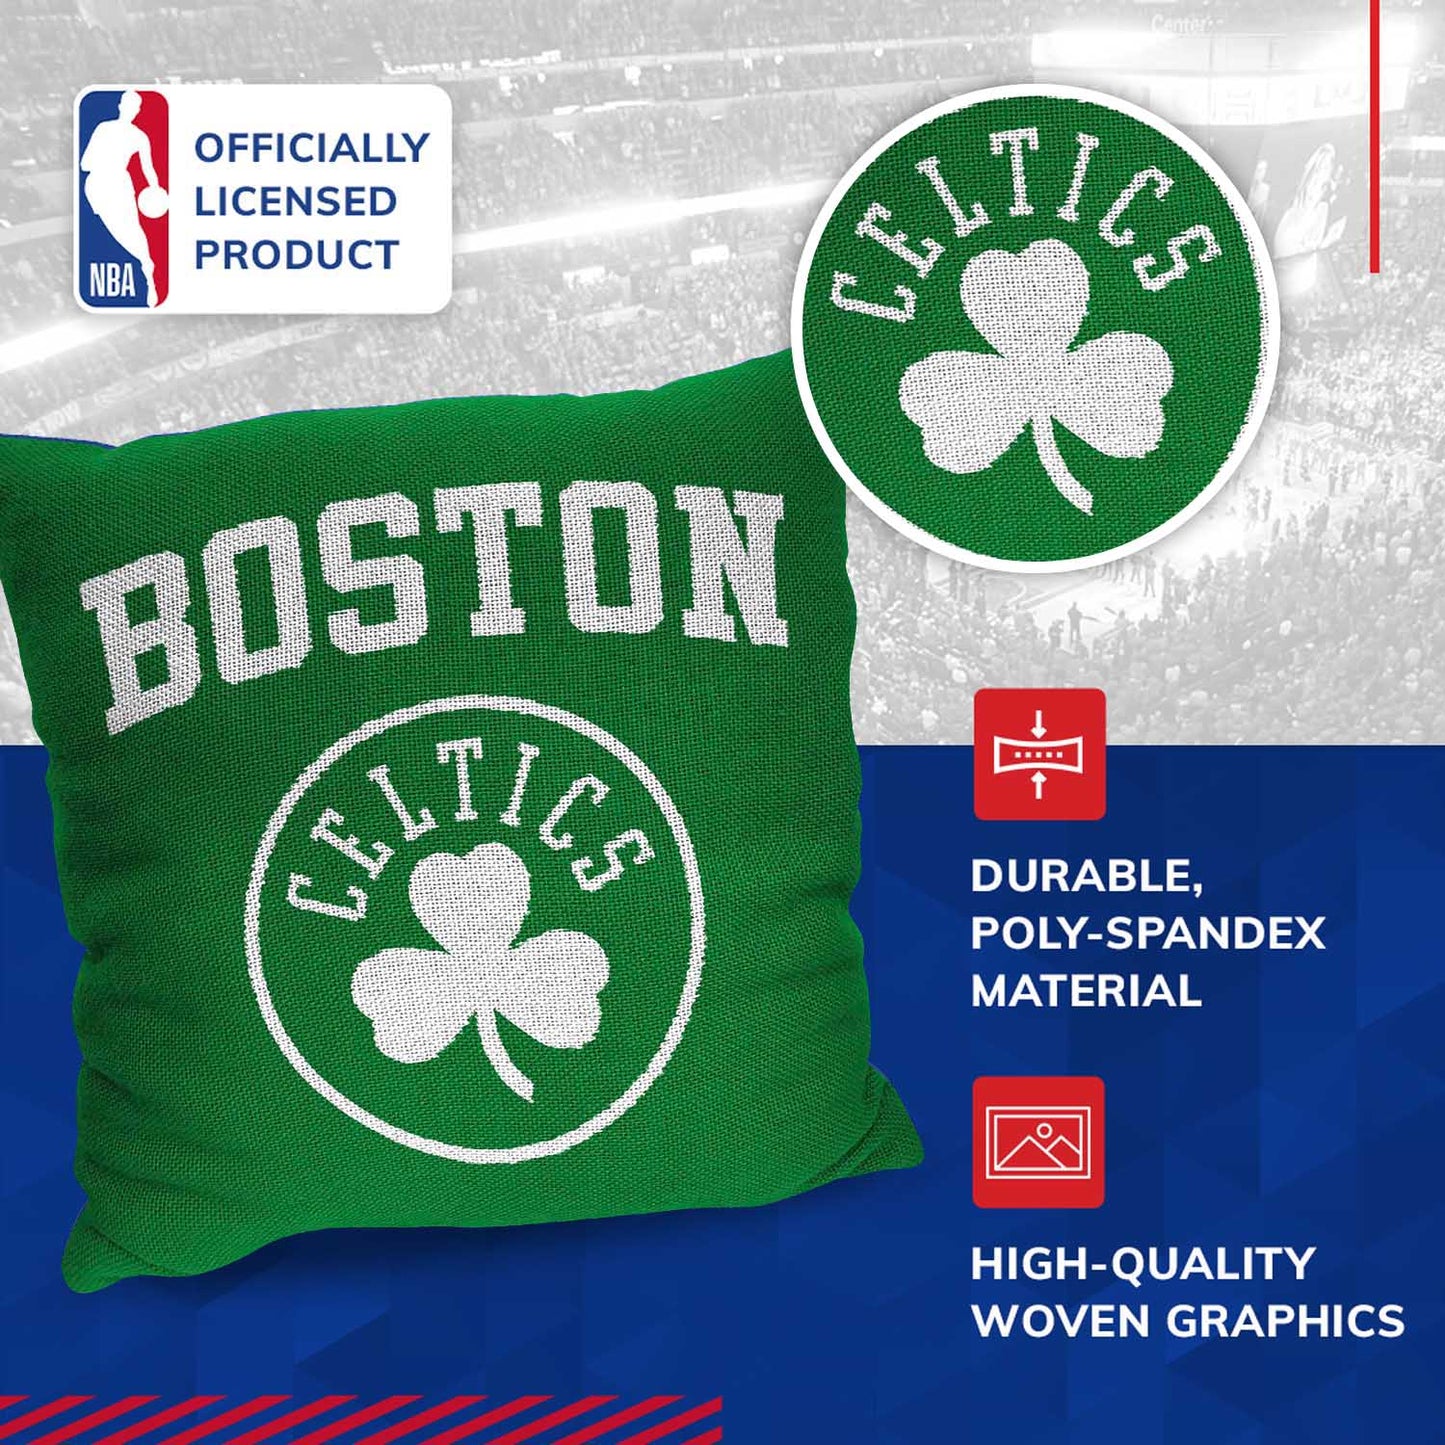 Boston Celtics NBA Decorative Basketball Throw Pillow - Green